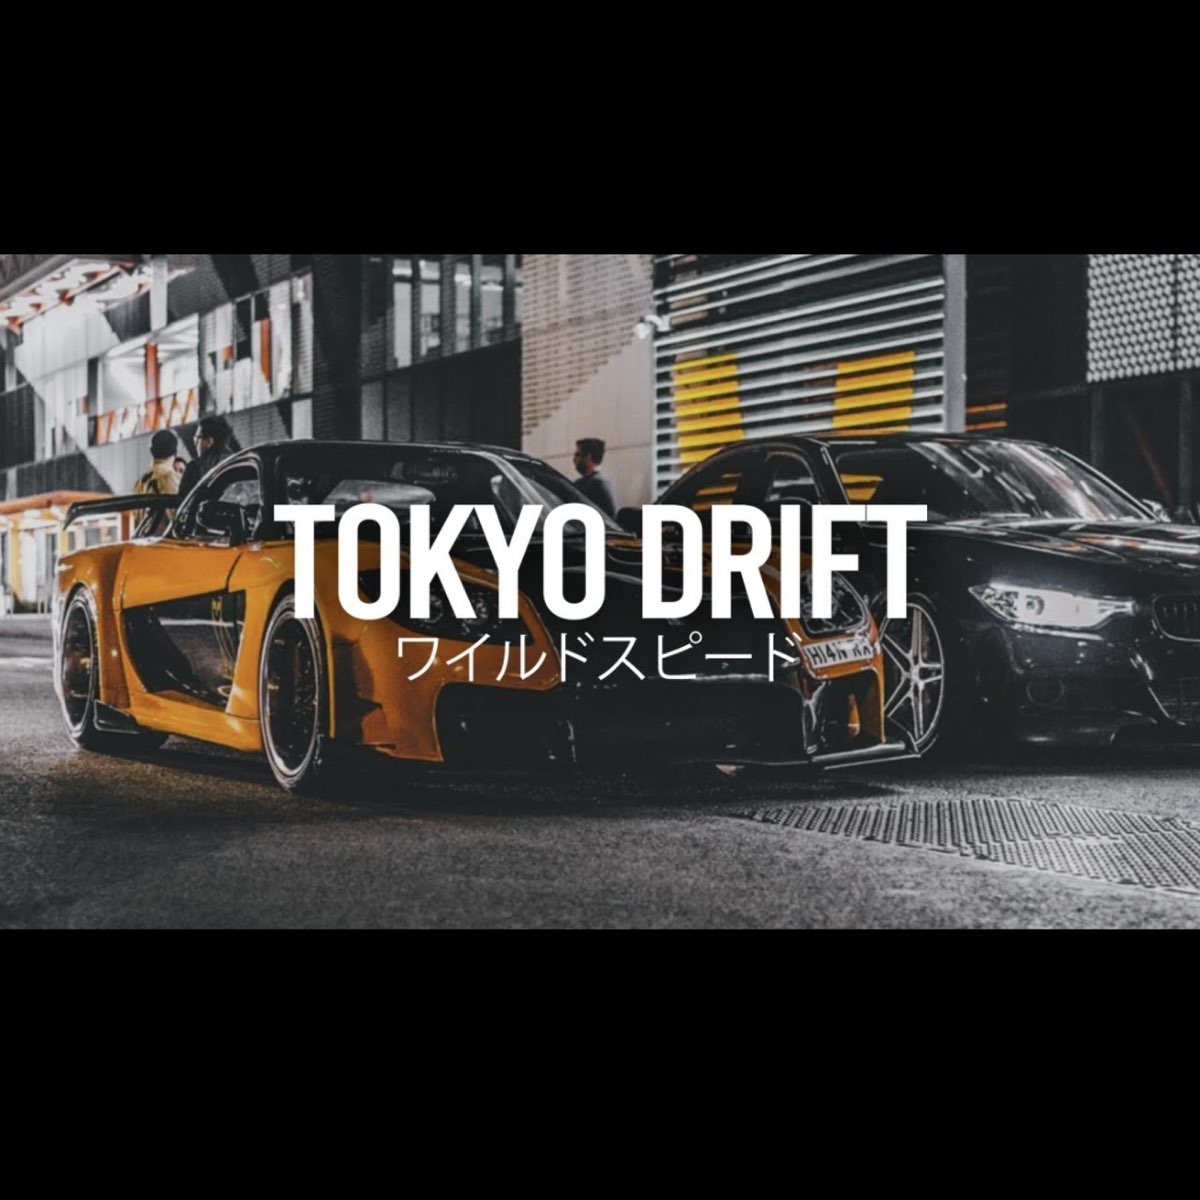 Tokyo Drift mp3. Sean Pool-Tokyo Drift Remix. Песня Токио дрифт ремикс.